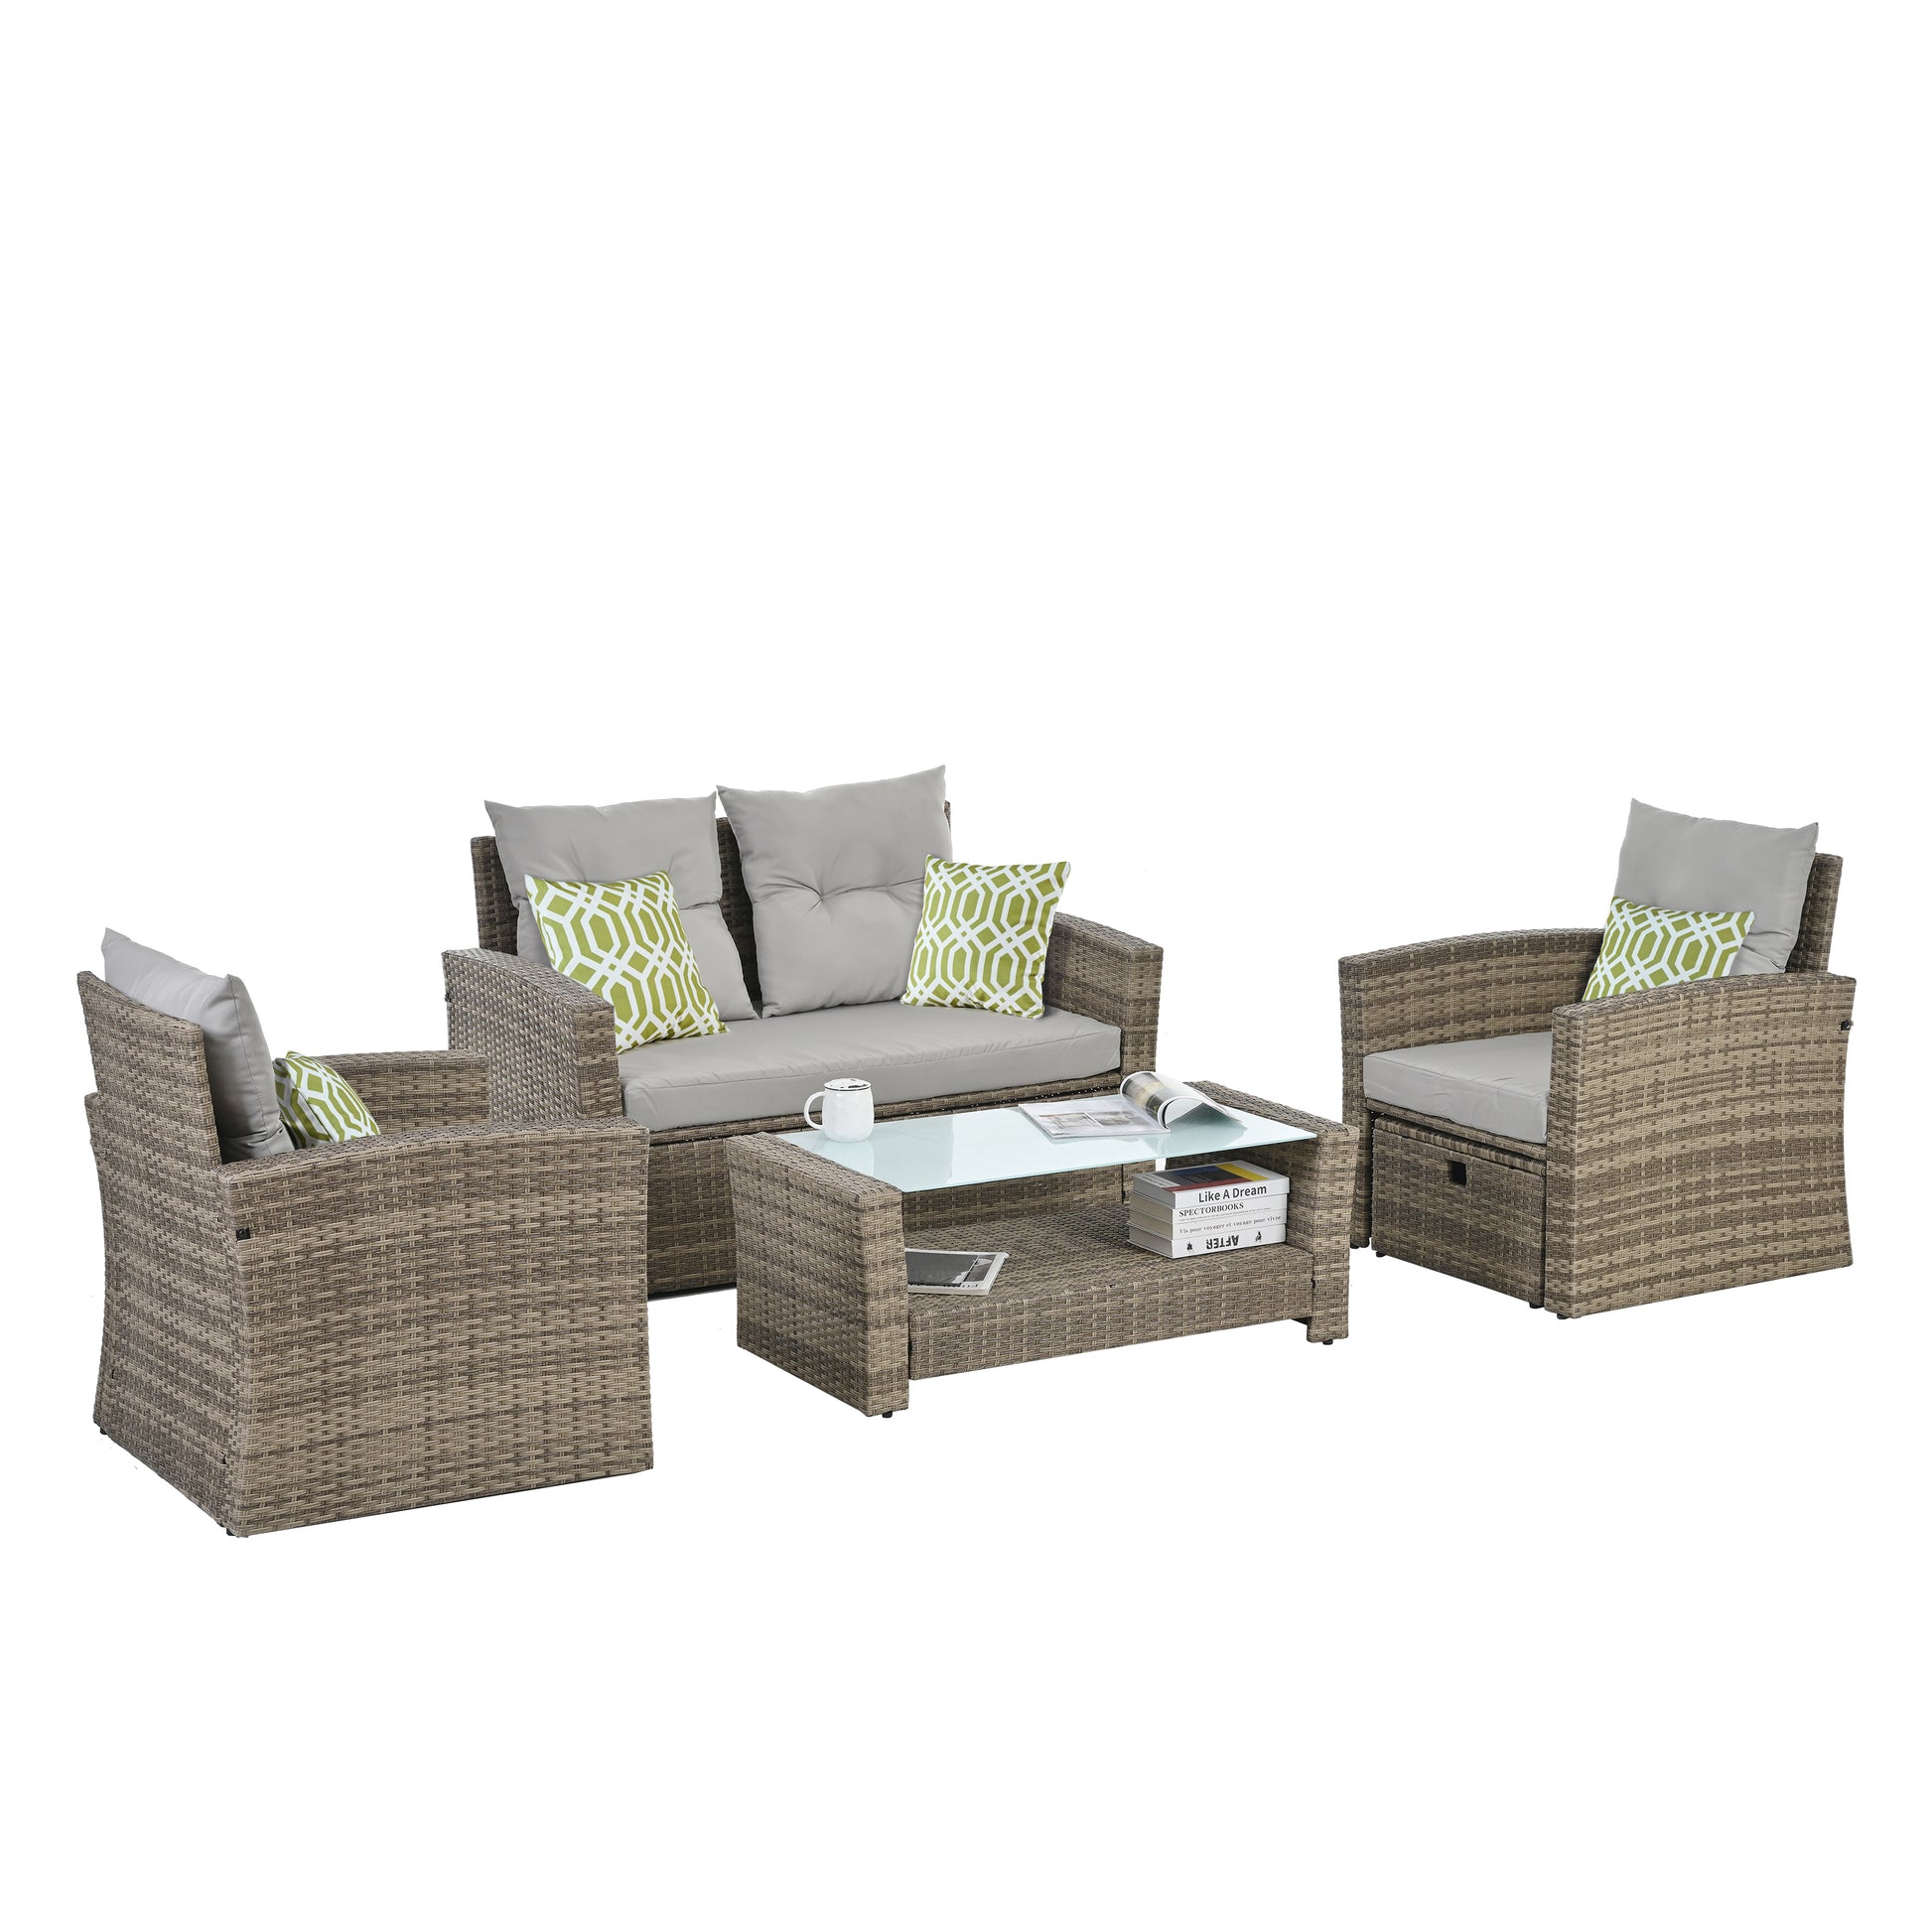 Patio Furniture, Outdoor Furniture, Seasonal 6 Set, Coffee Table